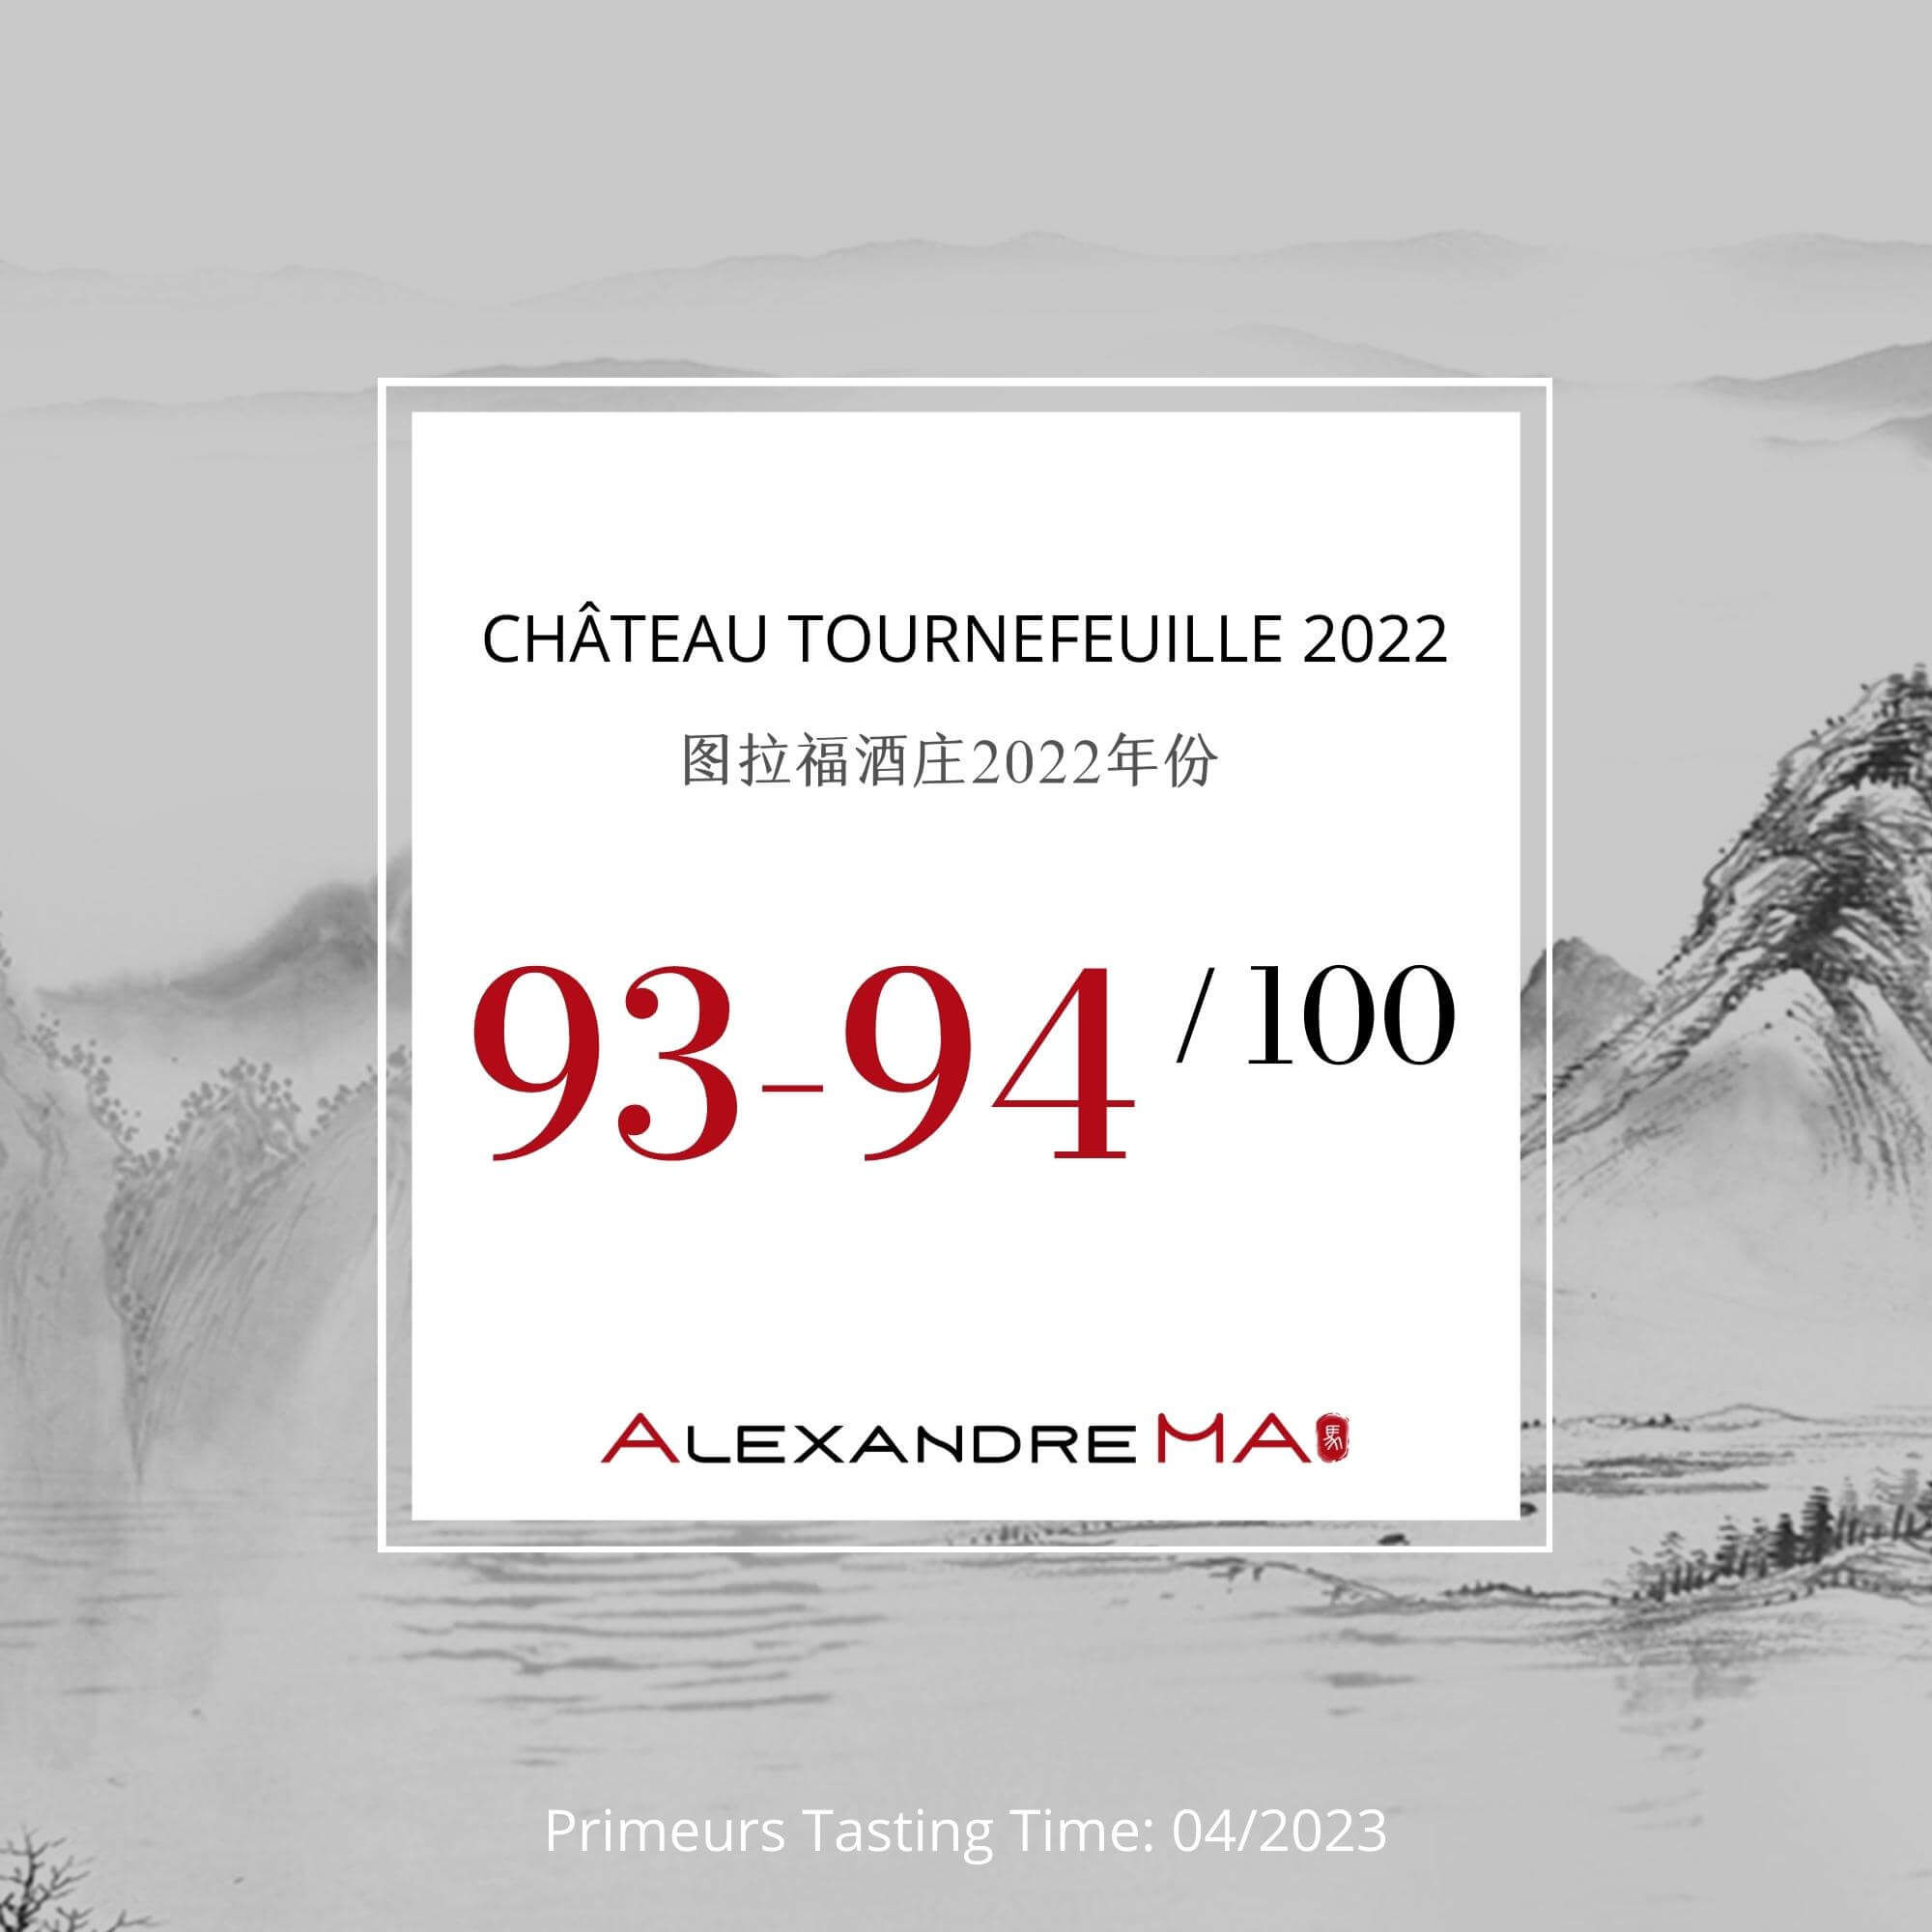 Château Tournefeuille 2022 Primeurs - Alexandre MA